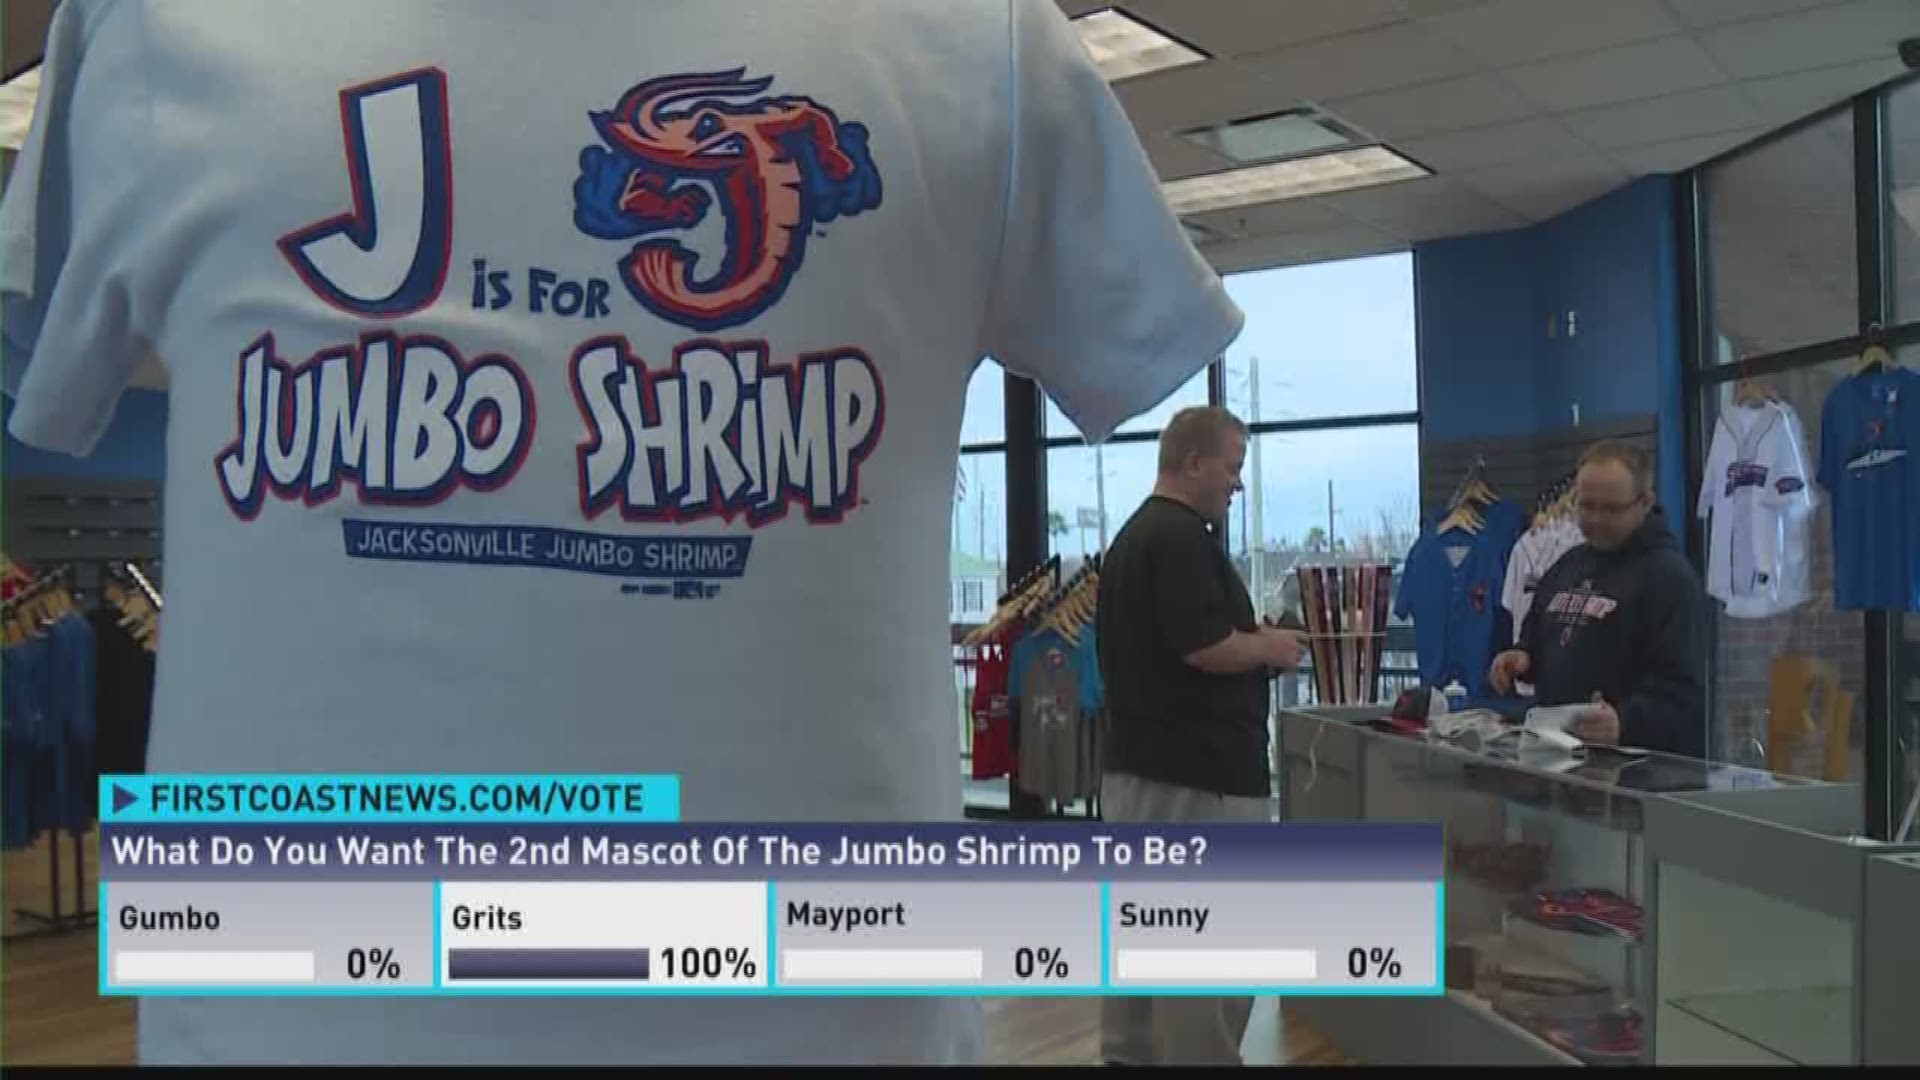 Jumbo Shrimp new mascot name